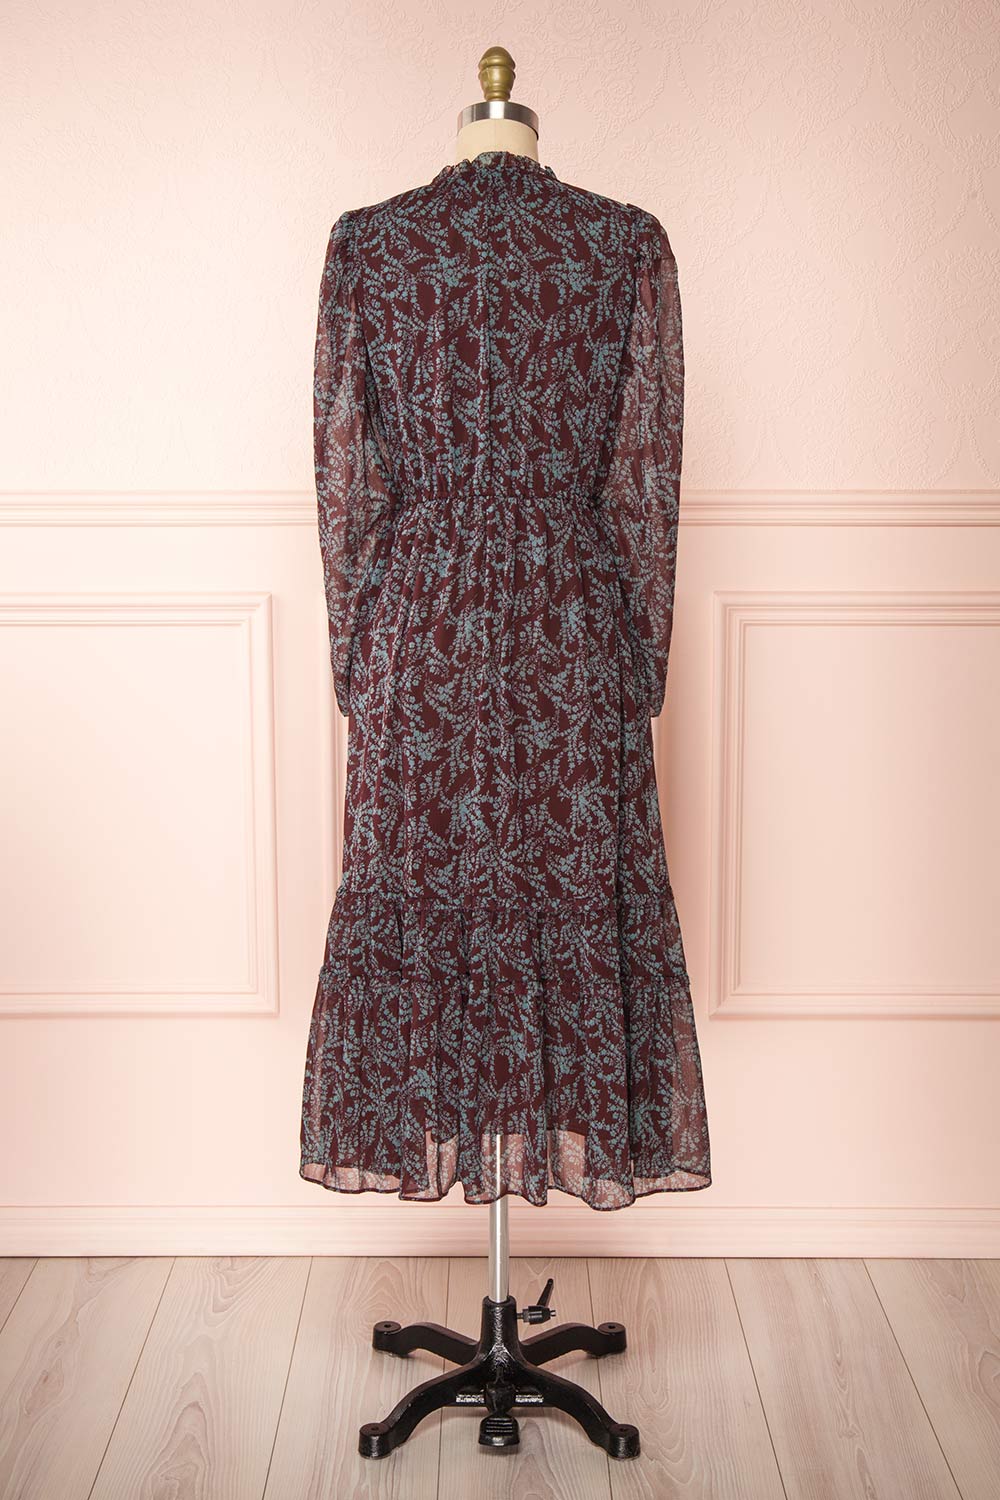 Irulan Burgundy & Teal Long Sleeve Maxi Dress | Boutique 1861 back view 